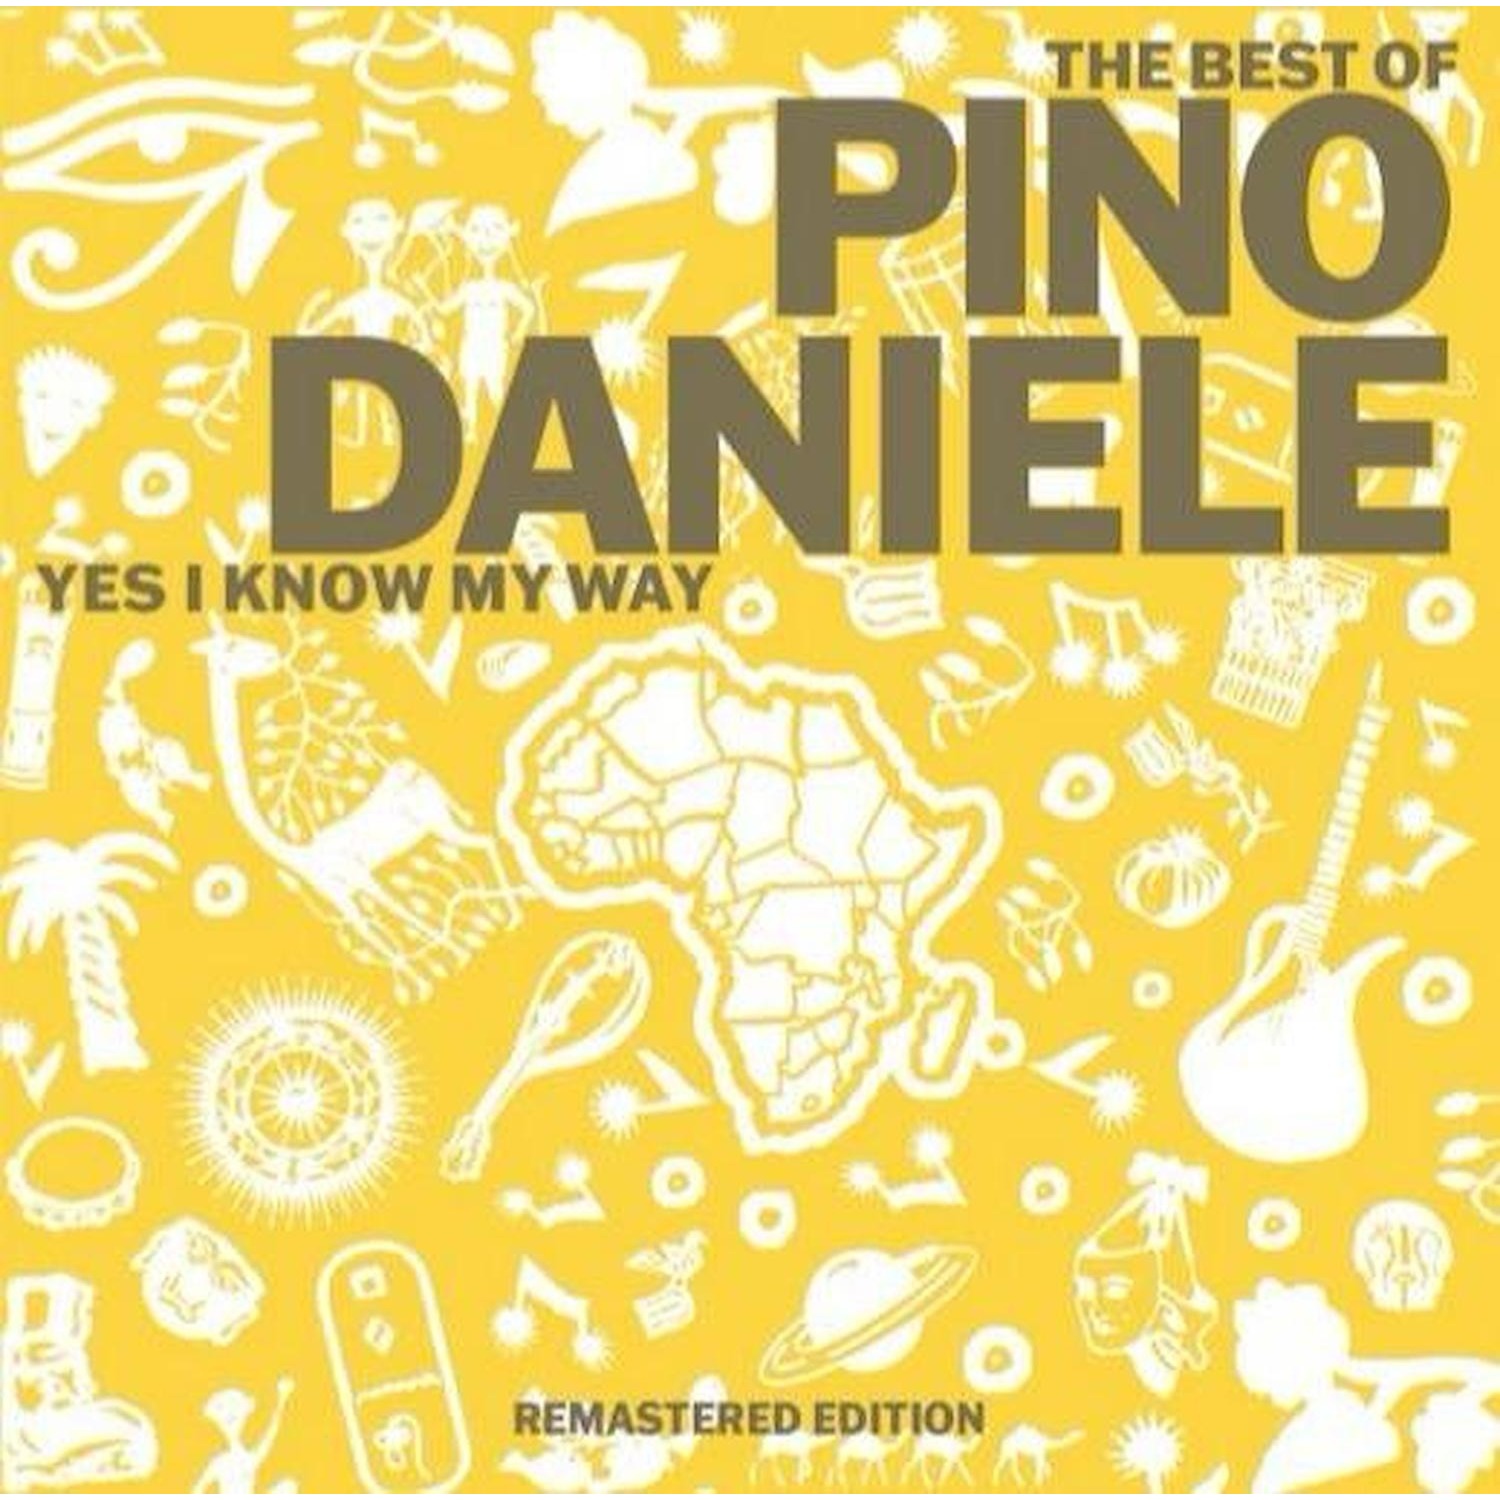 Immagine per CD Yes I know my way - The Best of  Pino Daniele da DIMOStore